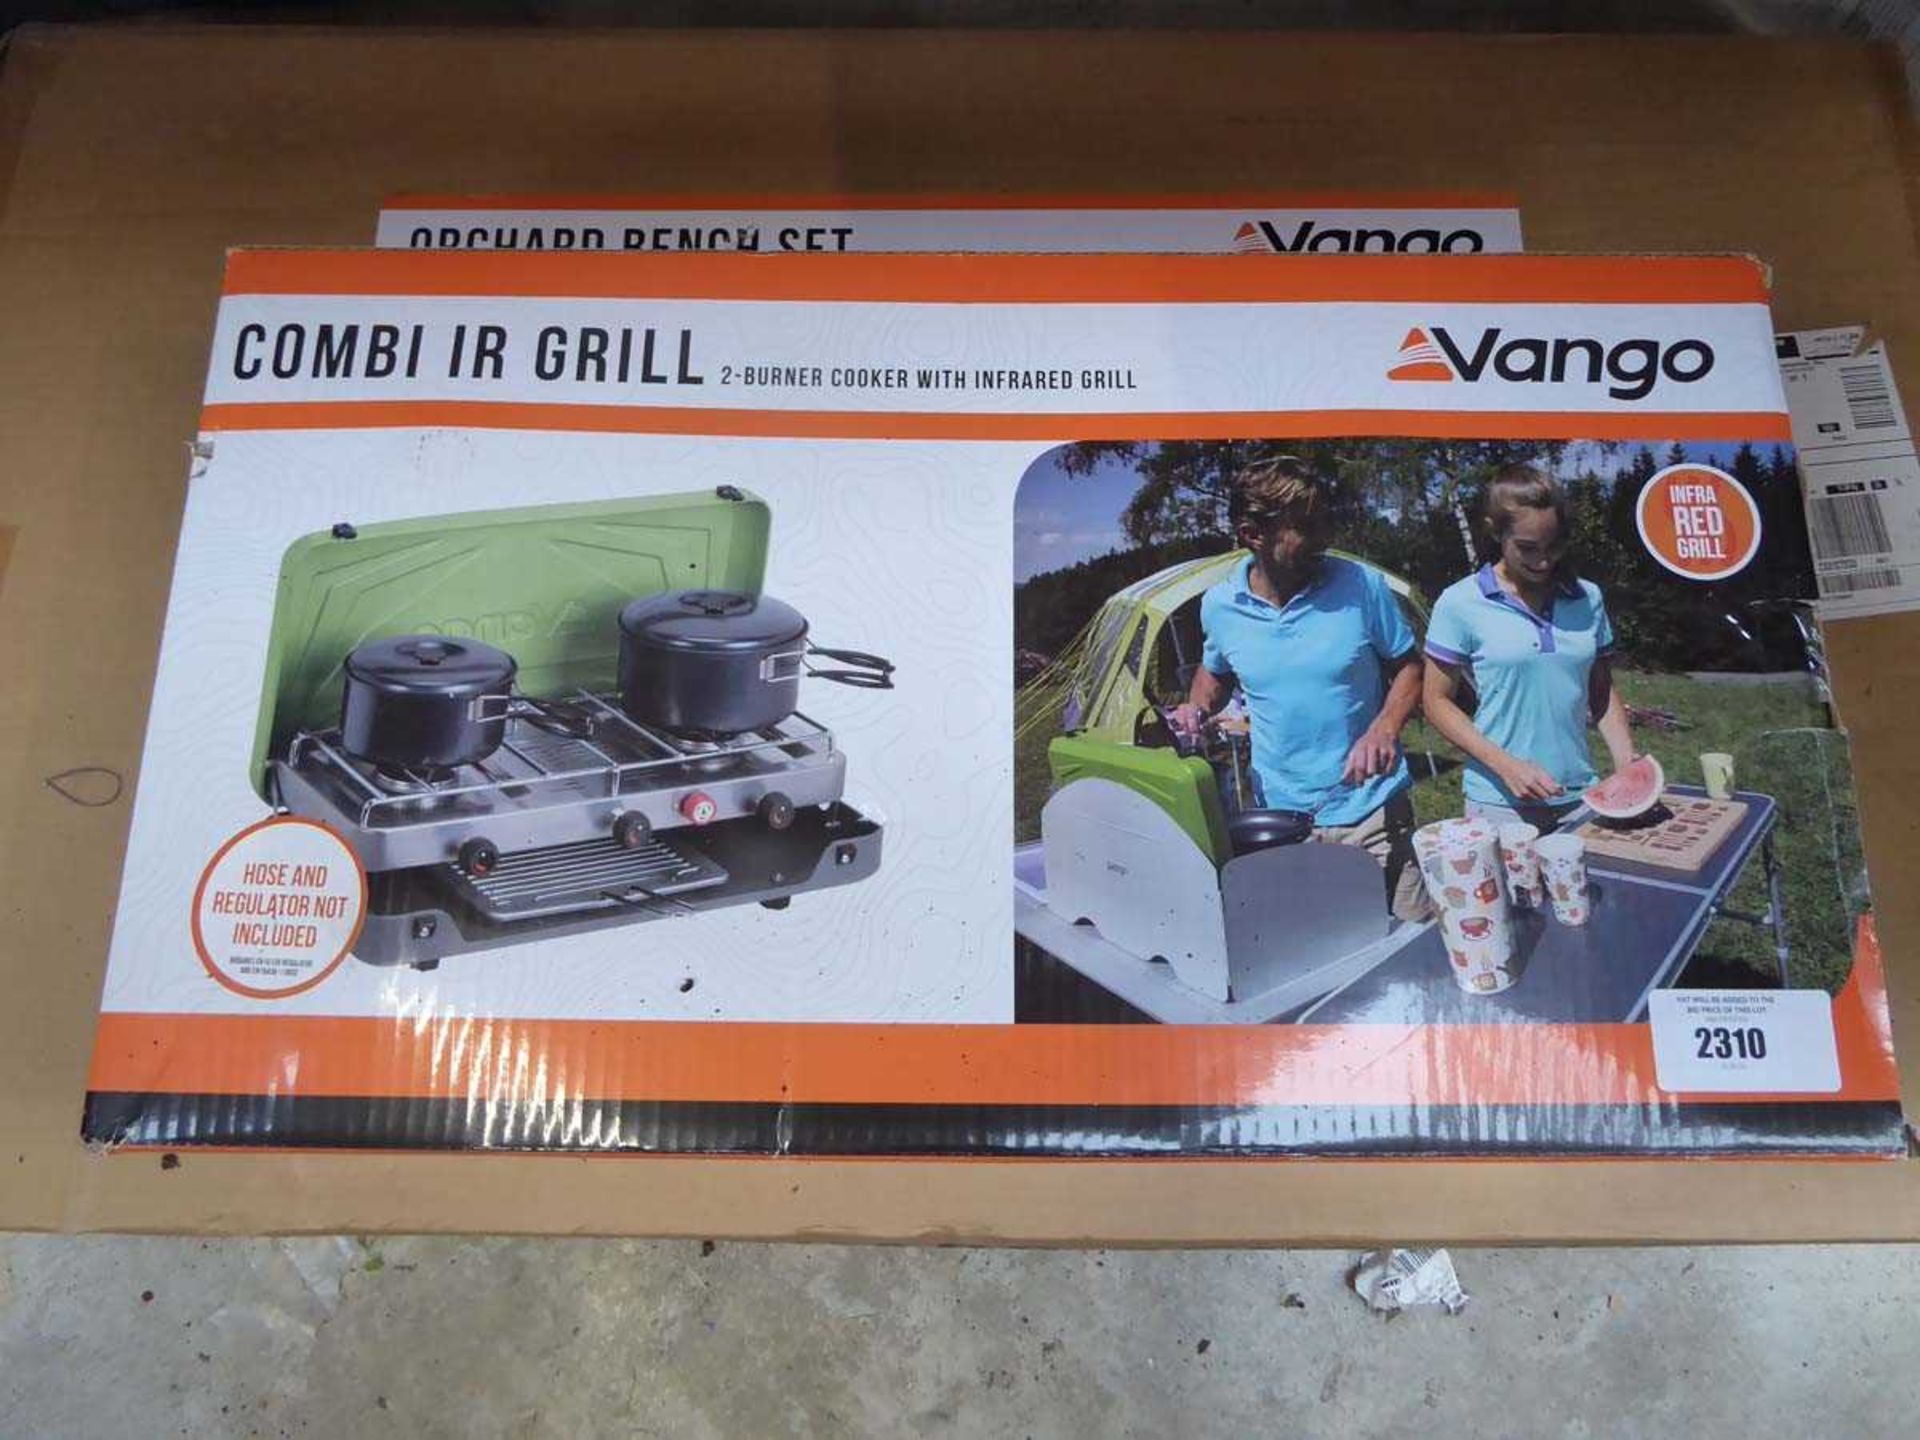 +VAT Boxed Vango Orchard collapsible bench set with Vango Combi IR 2 burner cooker grill - Image 2 of 3